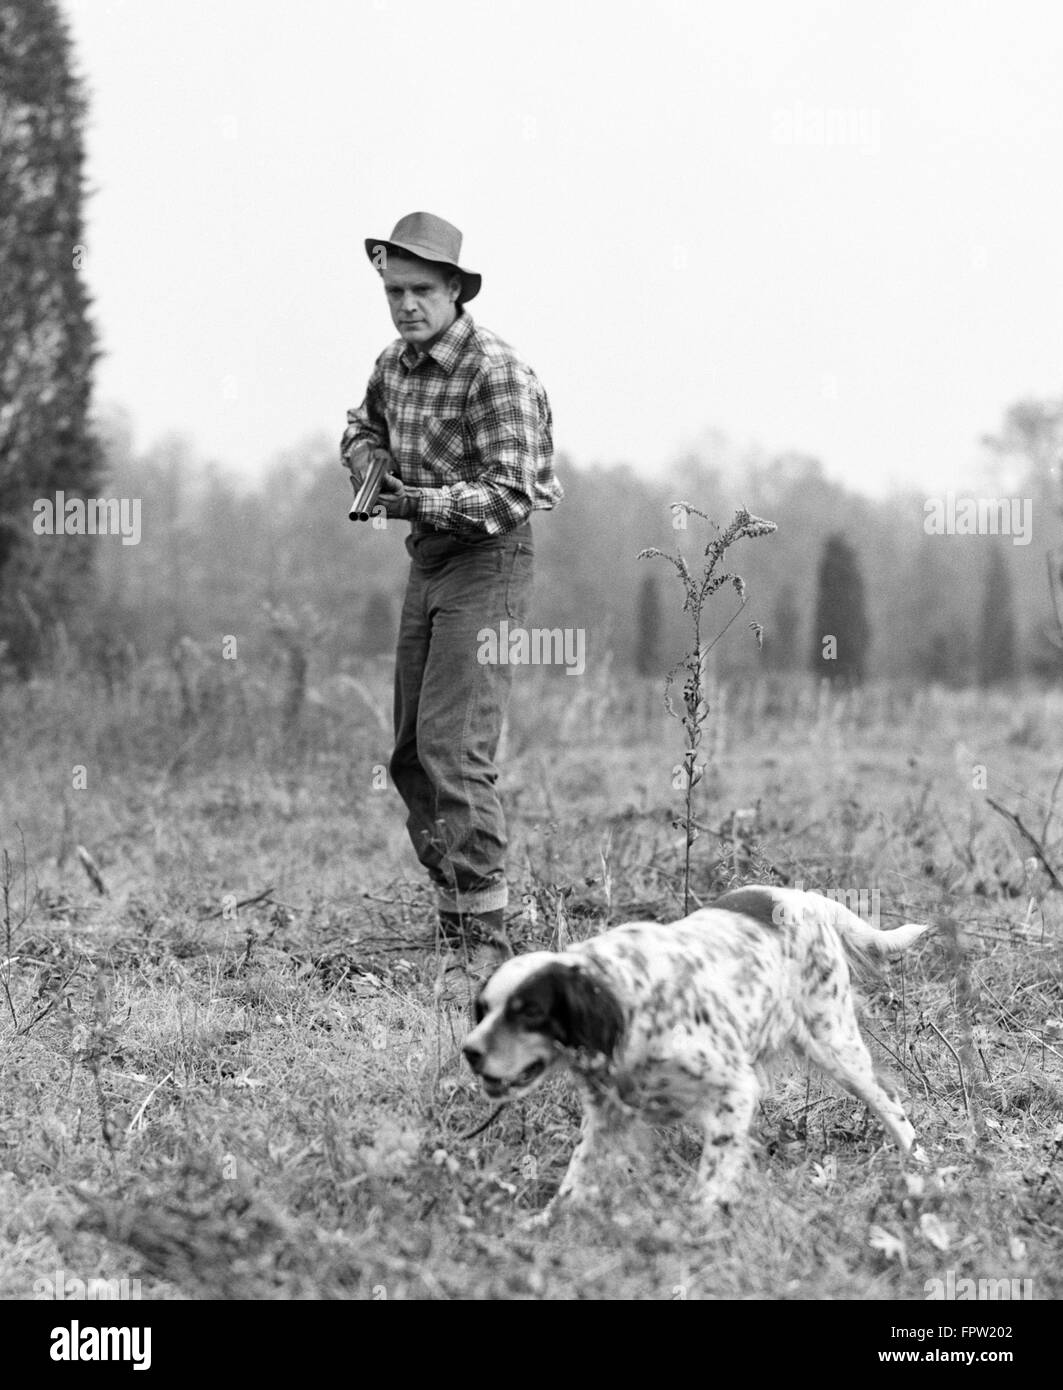 1940s 1950s MAN HUNTER PLAID SHIRT SHOTGUN WITH HUNTING DOG IN FIELD Stock Photo